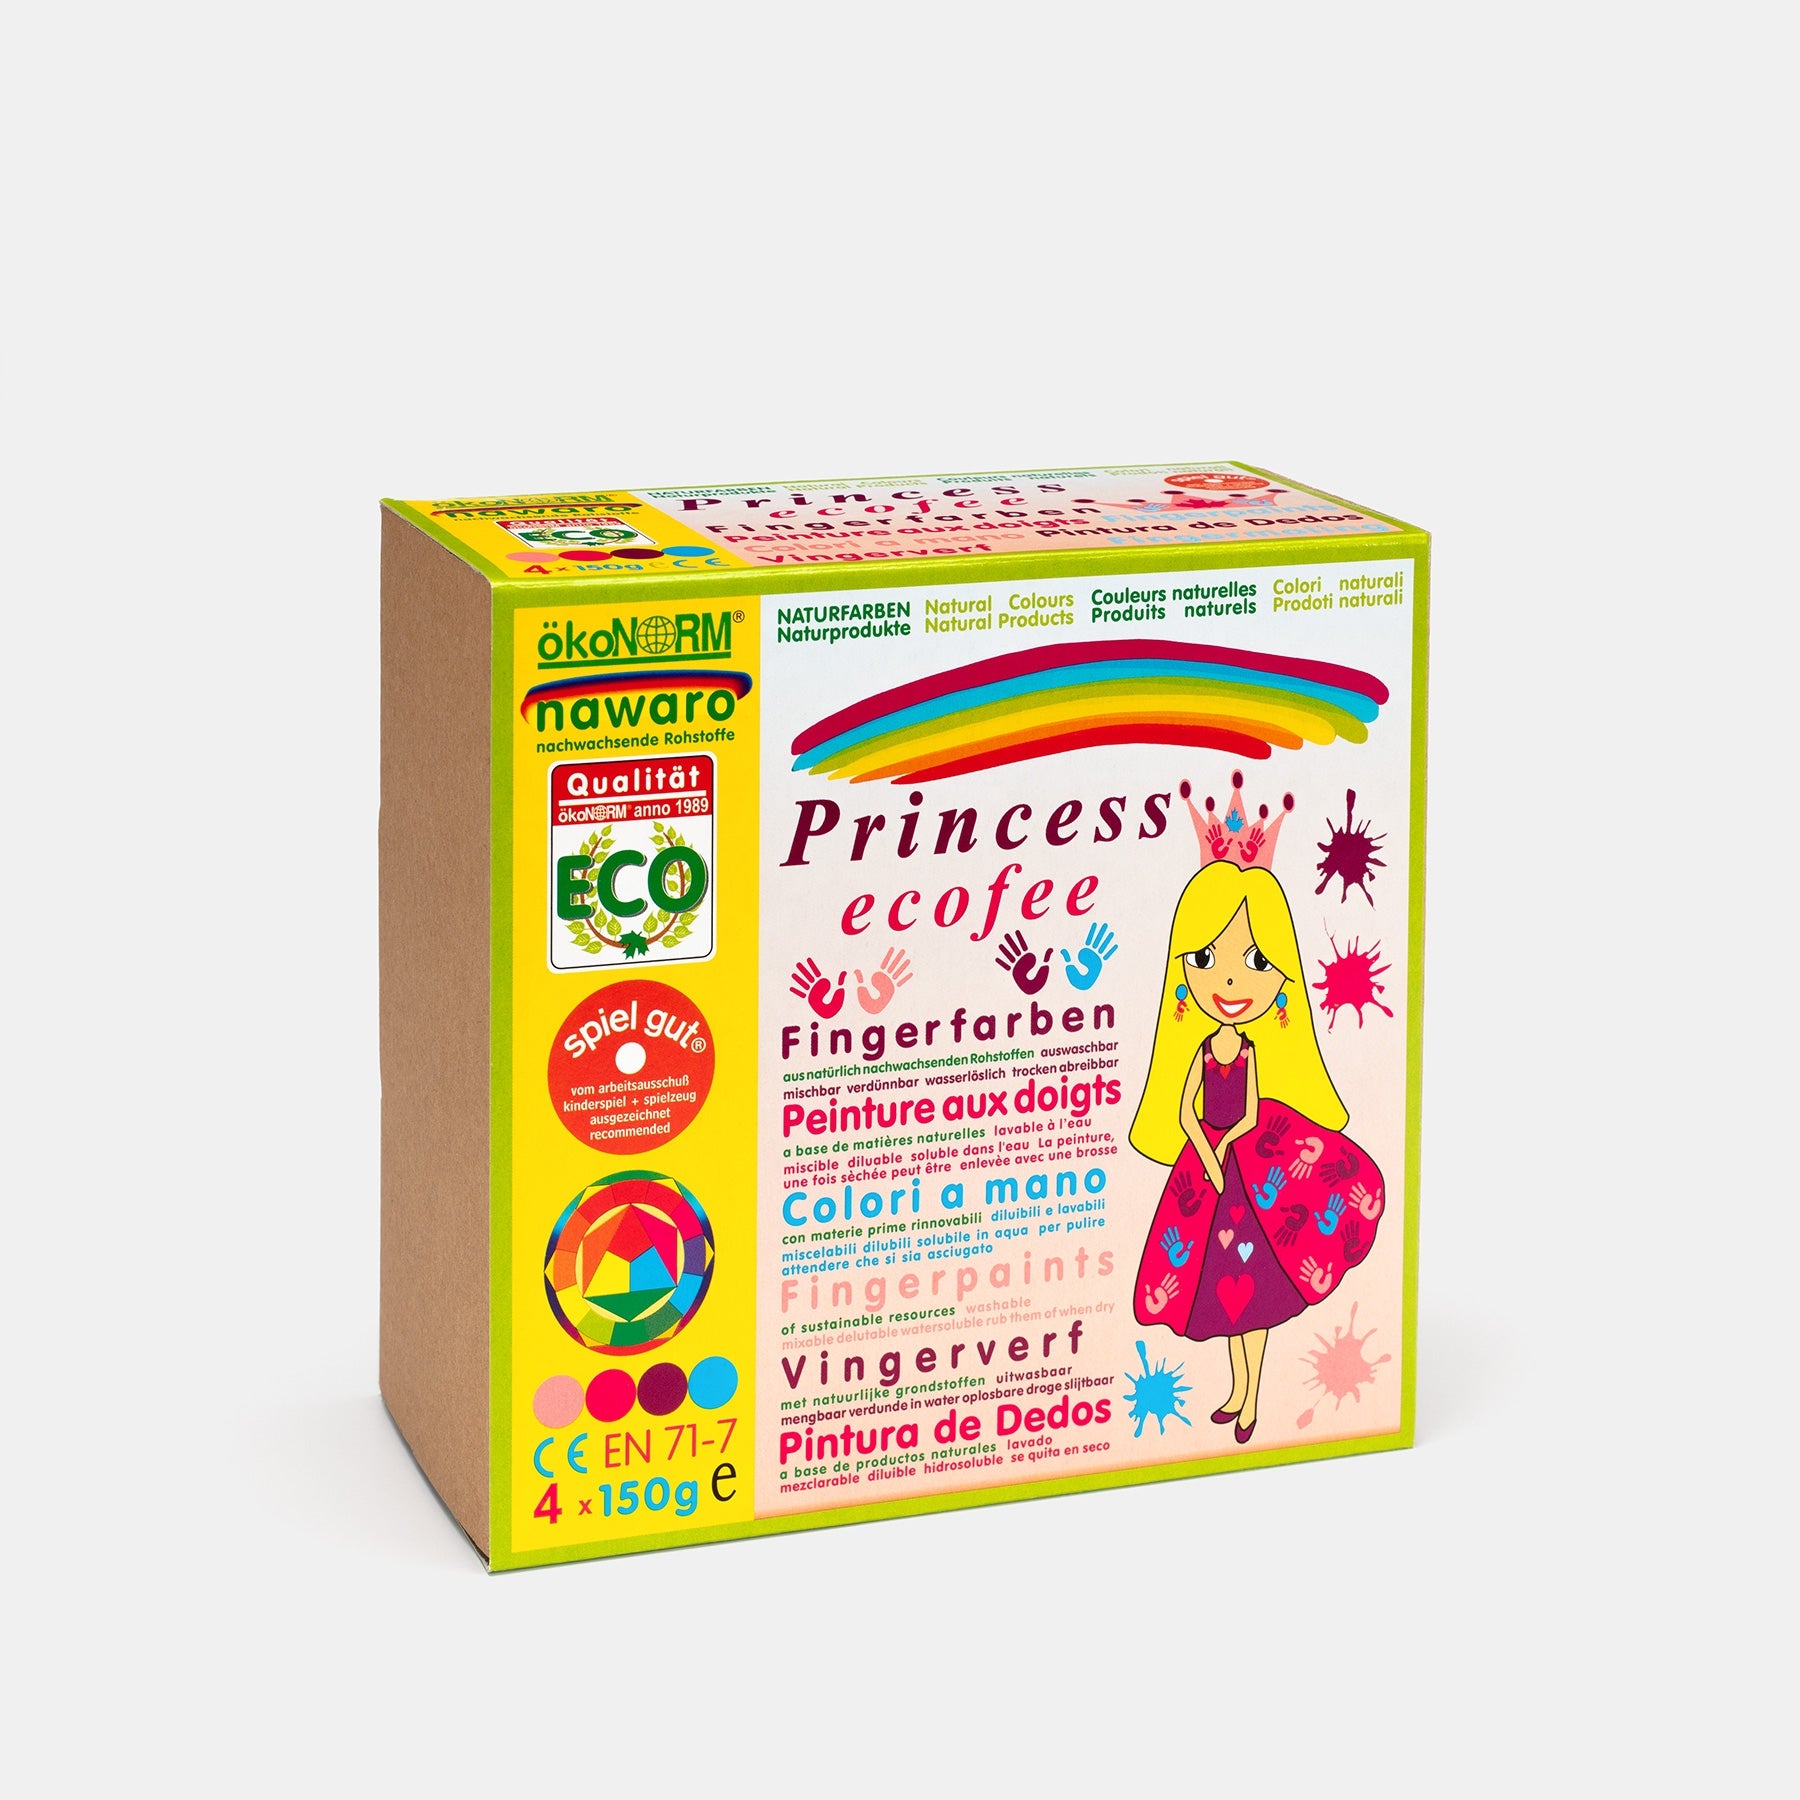 Fingerfarben Princess ecofee Ökonorm